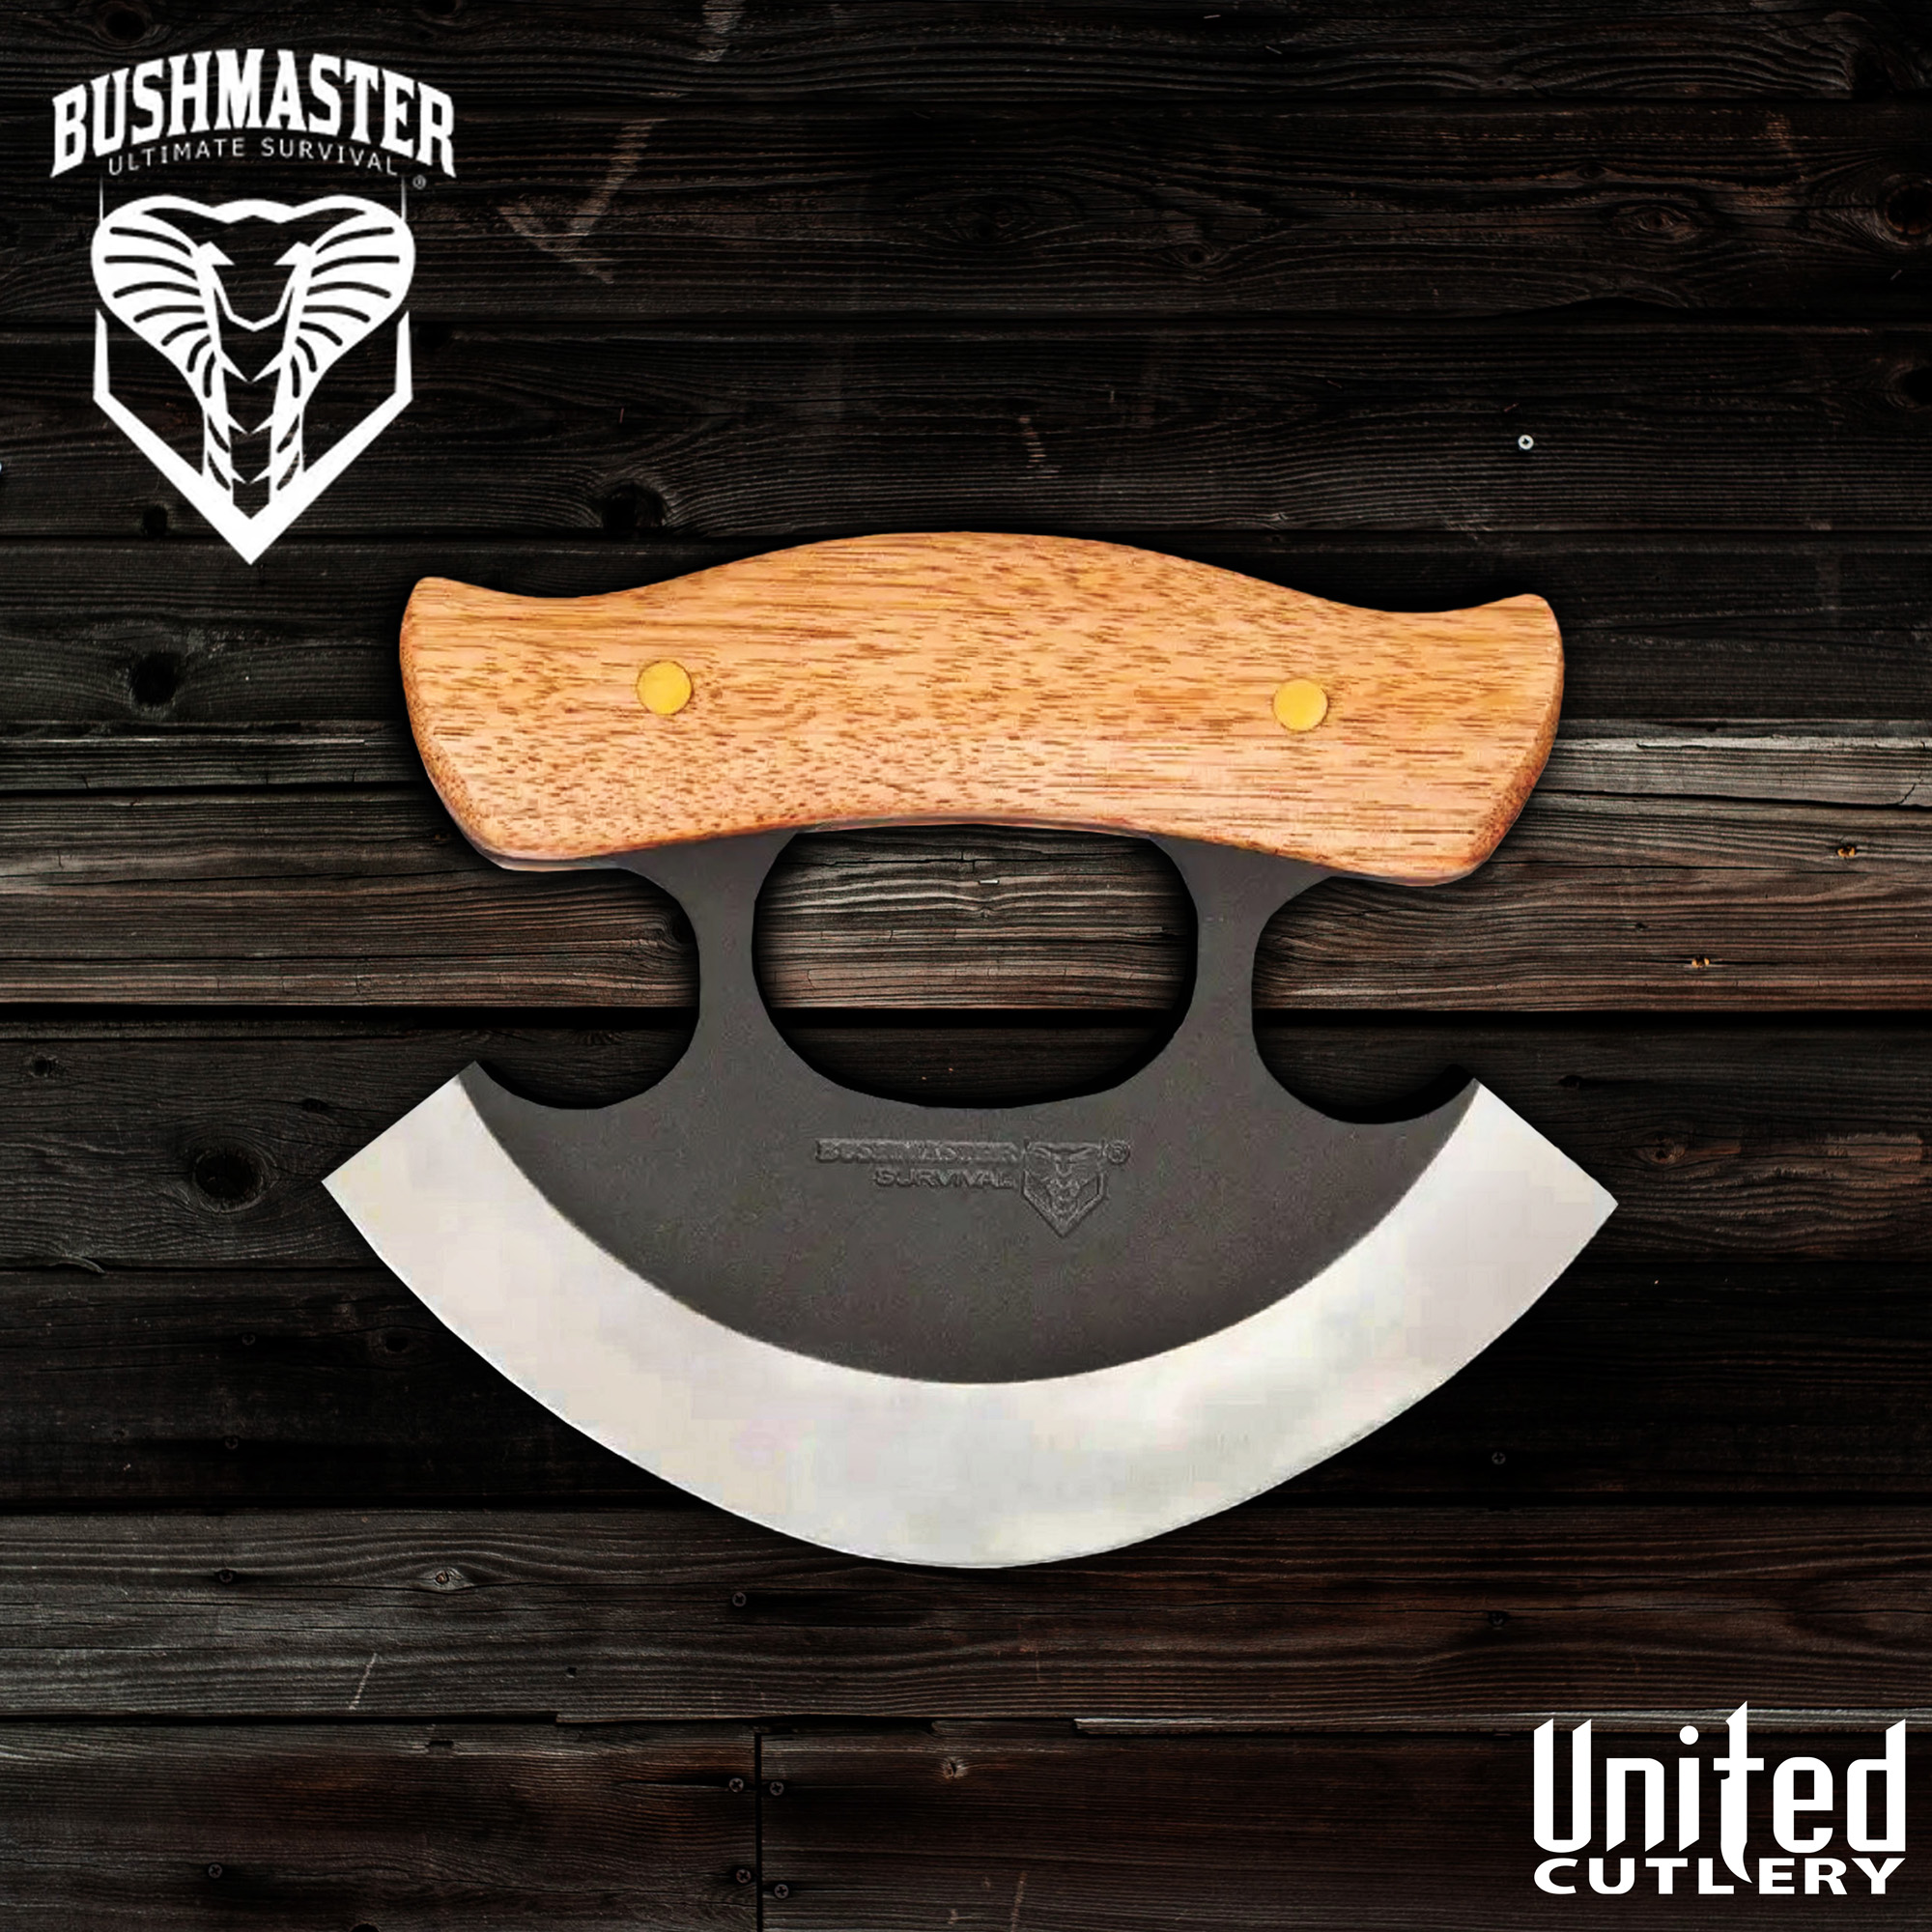 Bushmaster Ulu Bushcraft Knife And Sheath